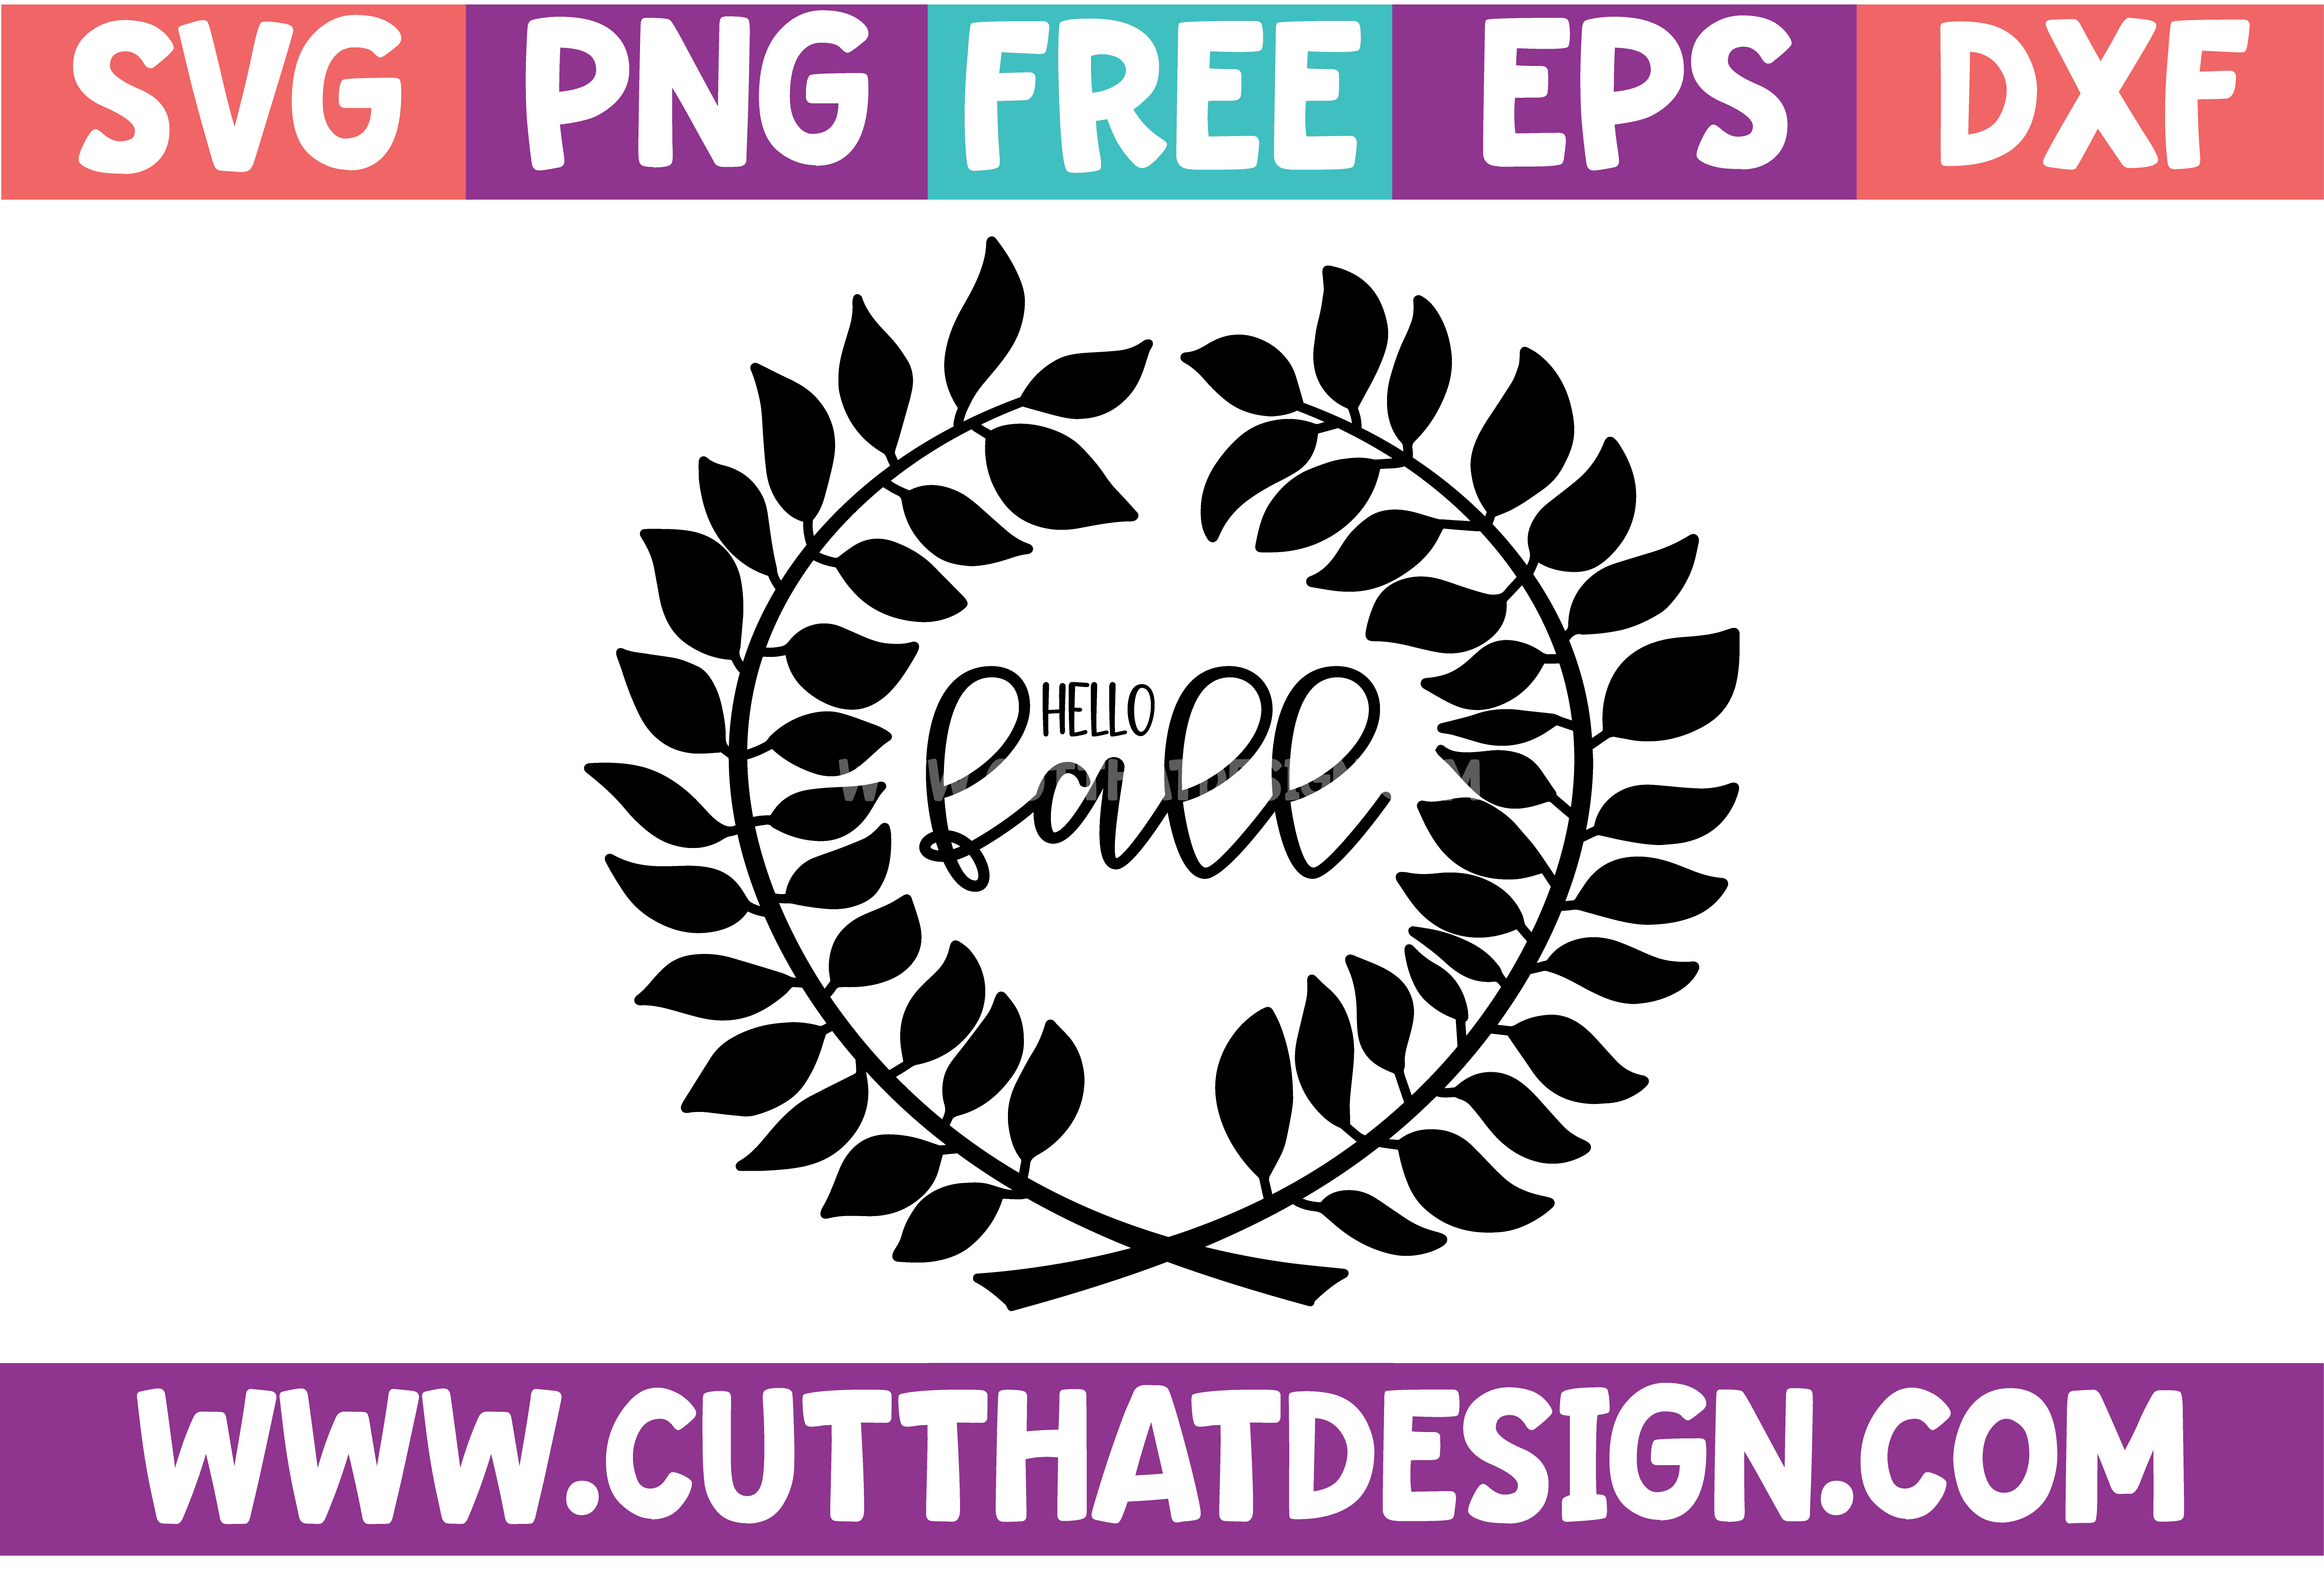 Free SVG Cutting Files